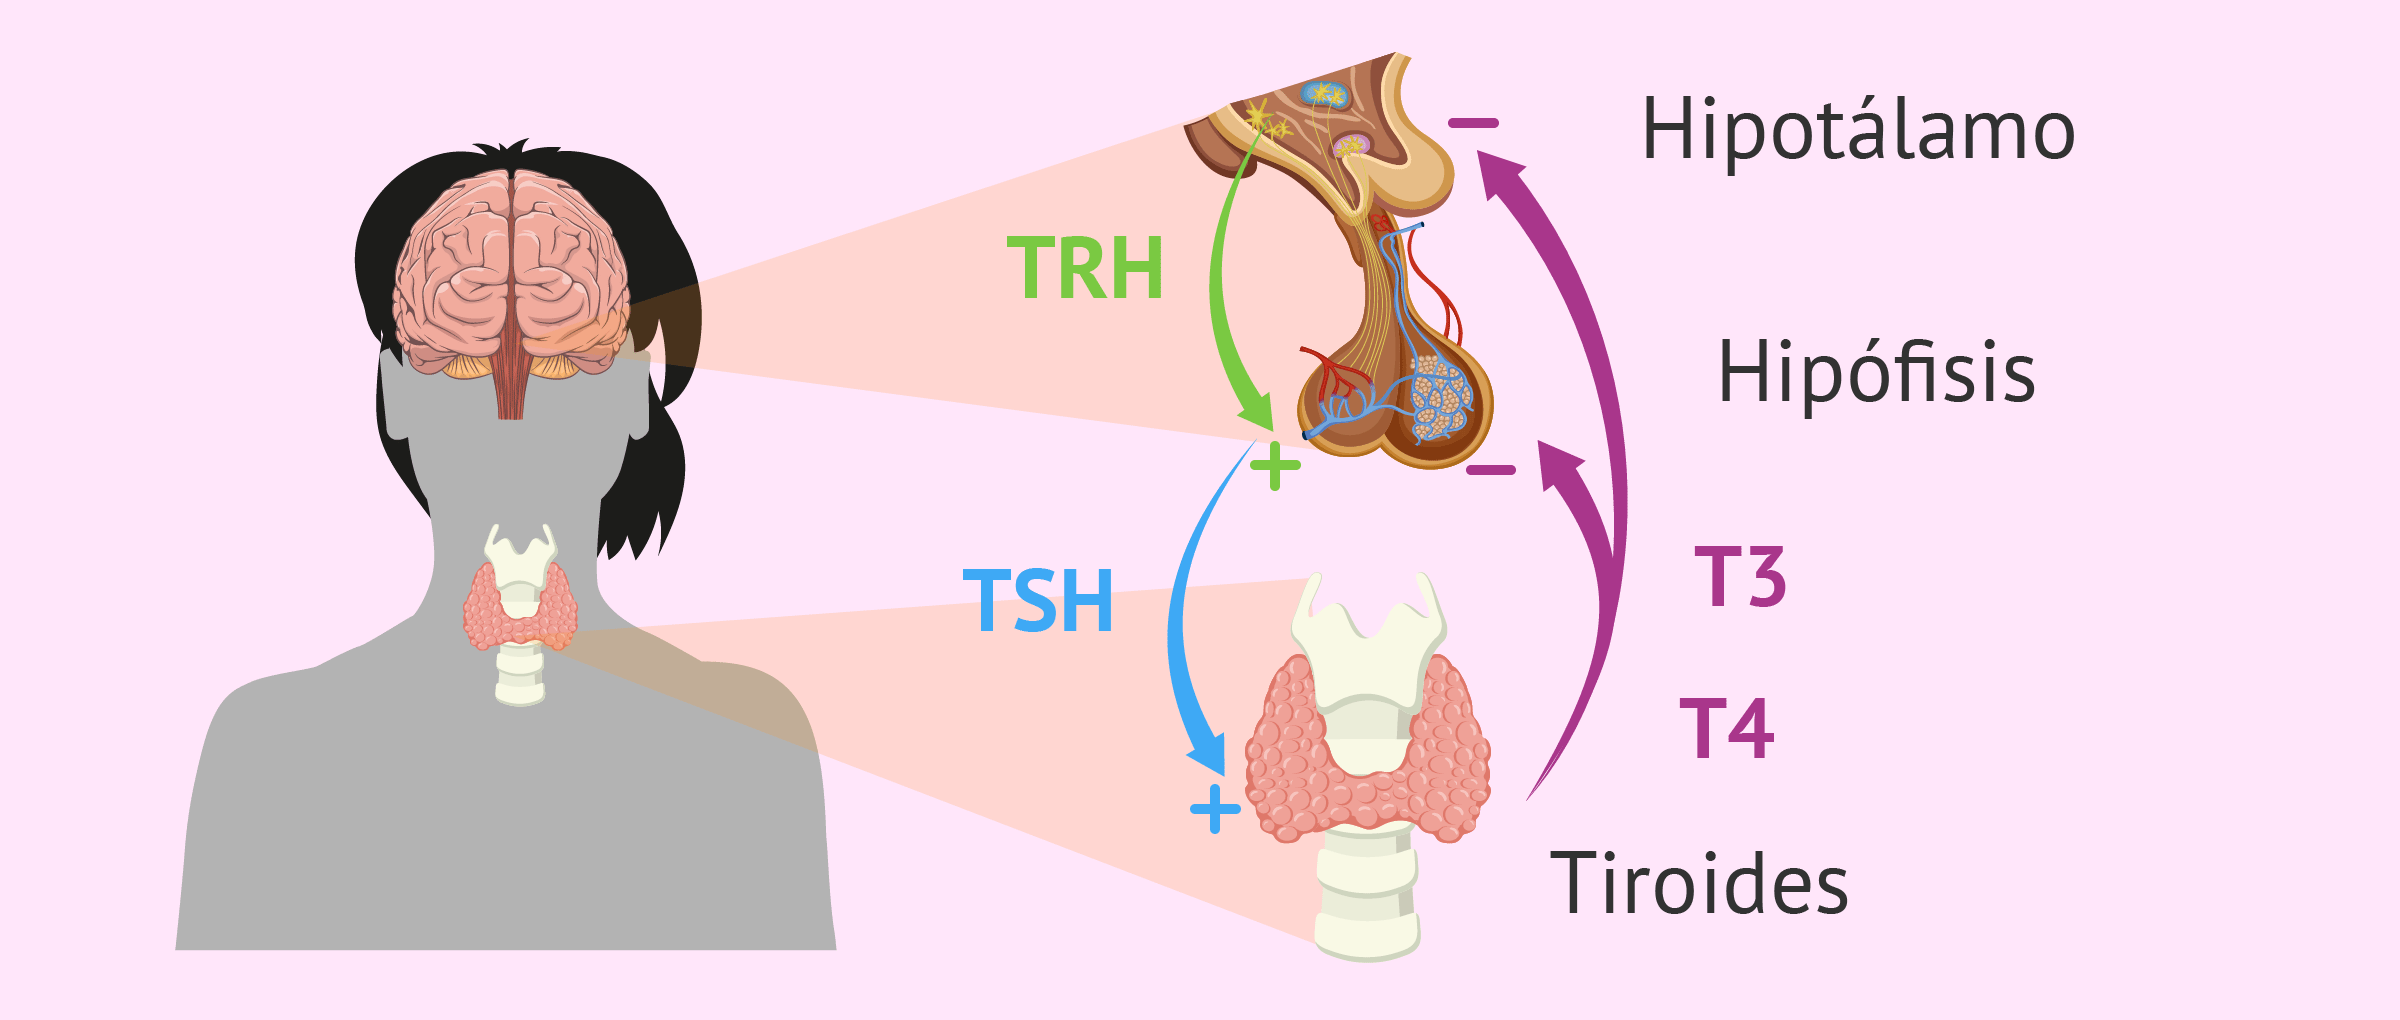 Trastornos en la glándula tiroides